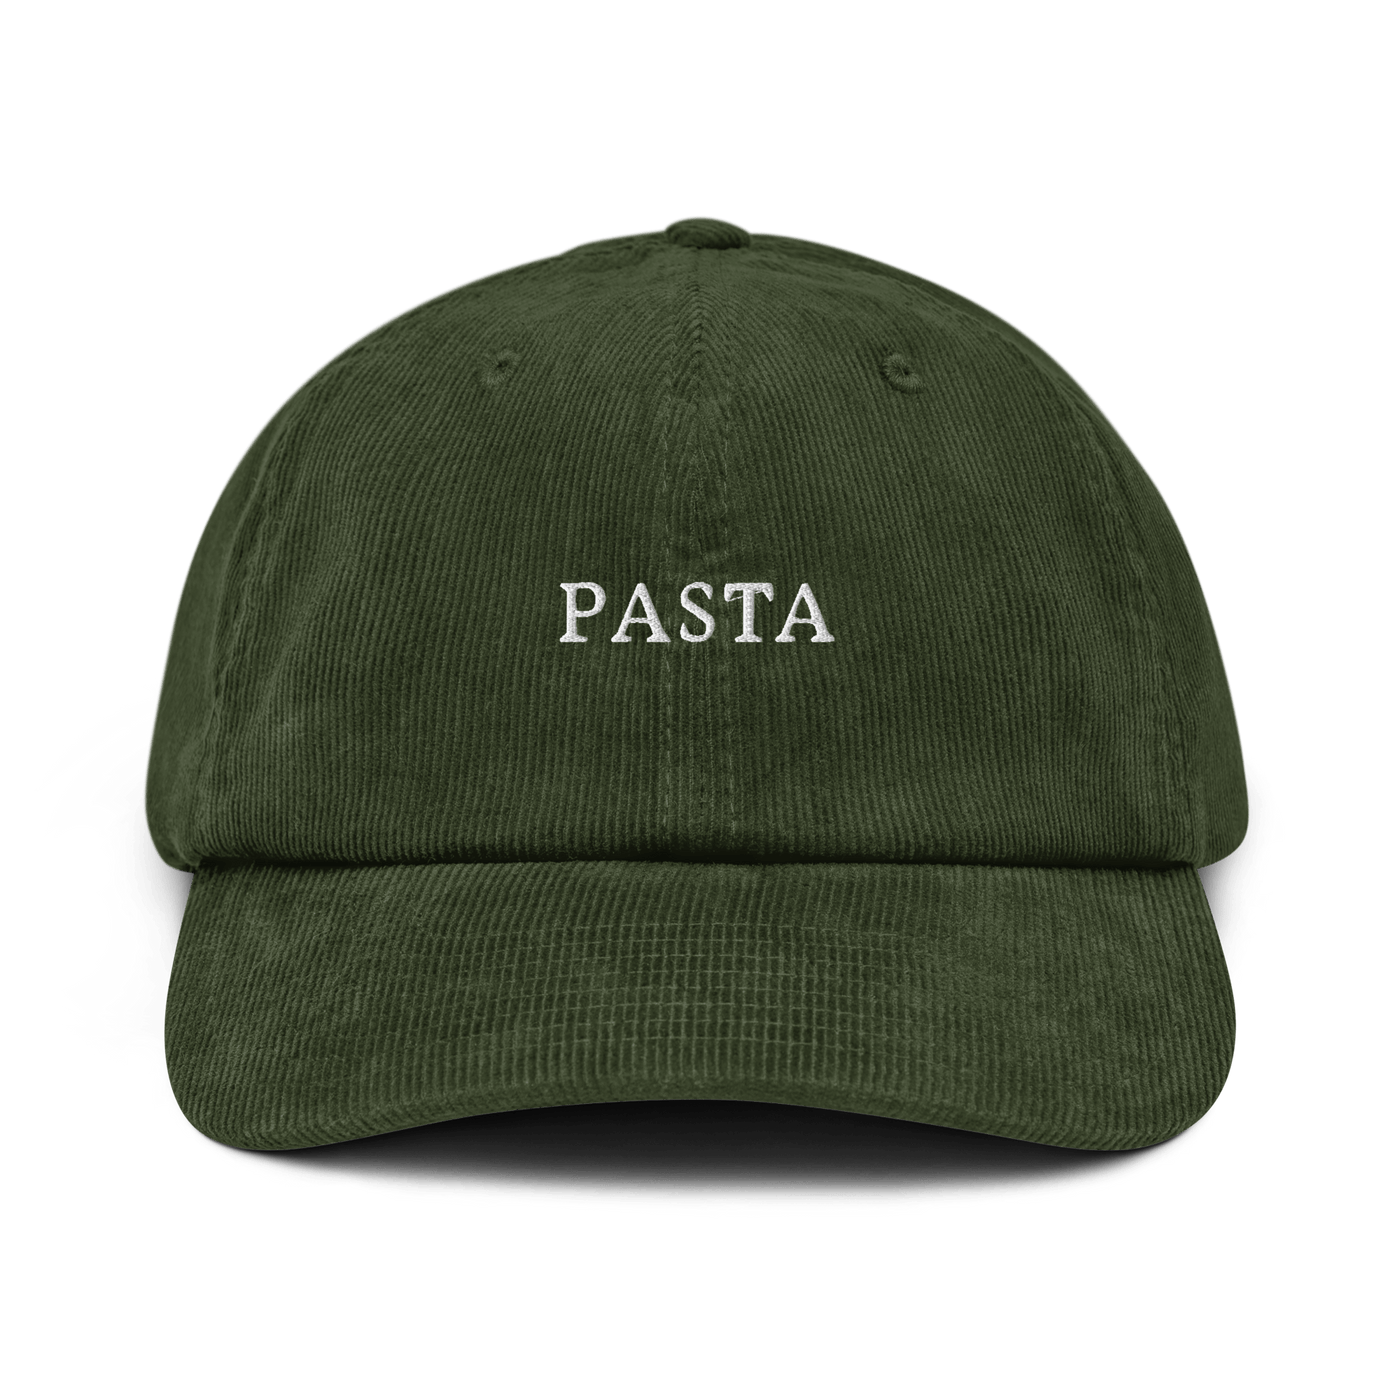 Pasta Corduroy hat - Dark Olive - - Just Another Cap Store